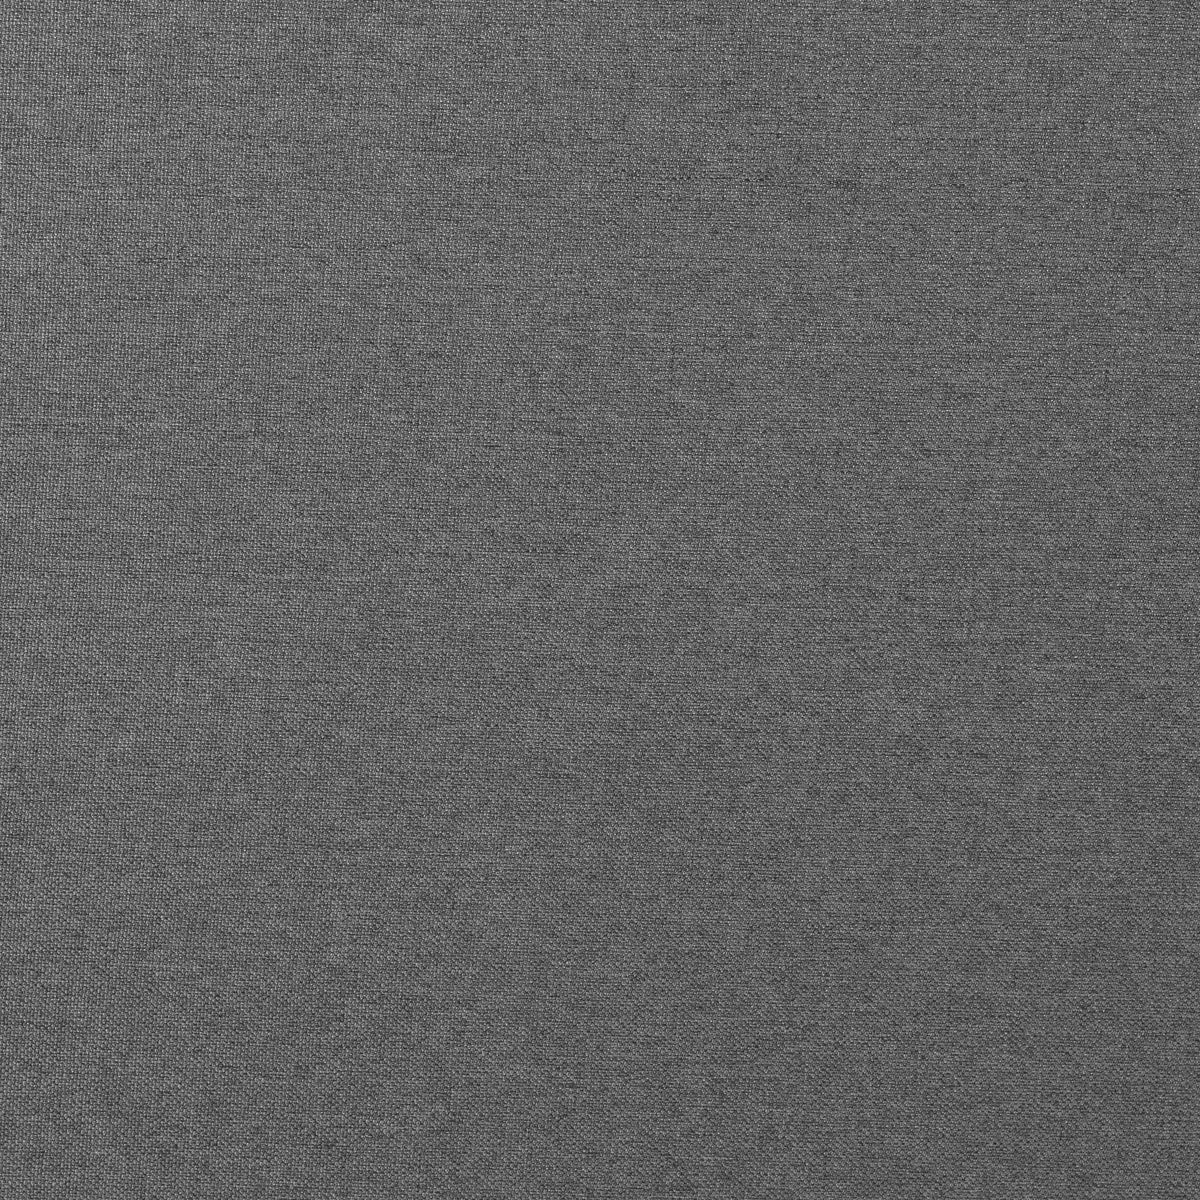 Dark Gray,King |#| King Size Upholstered Metal Panel Headboard in Dark Gray Fabric